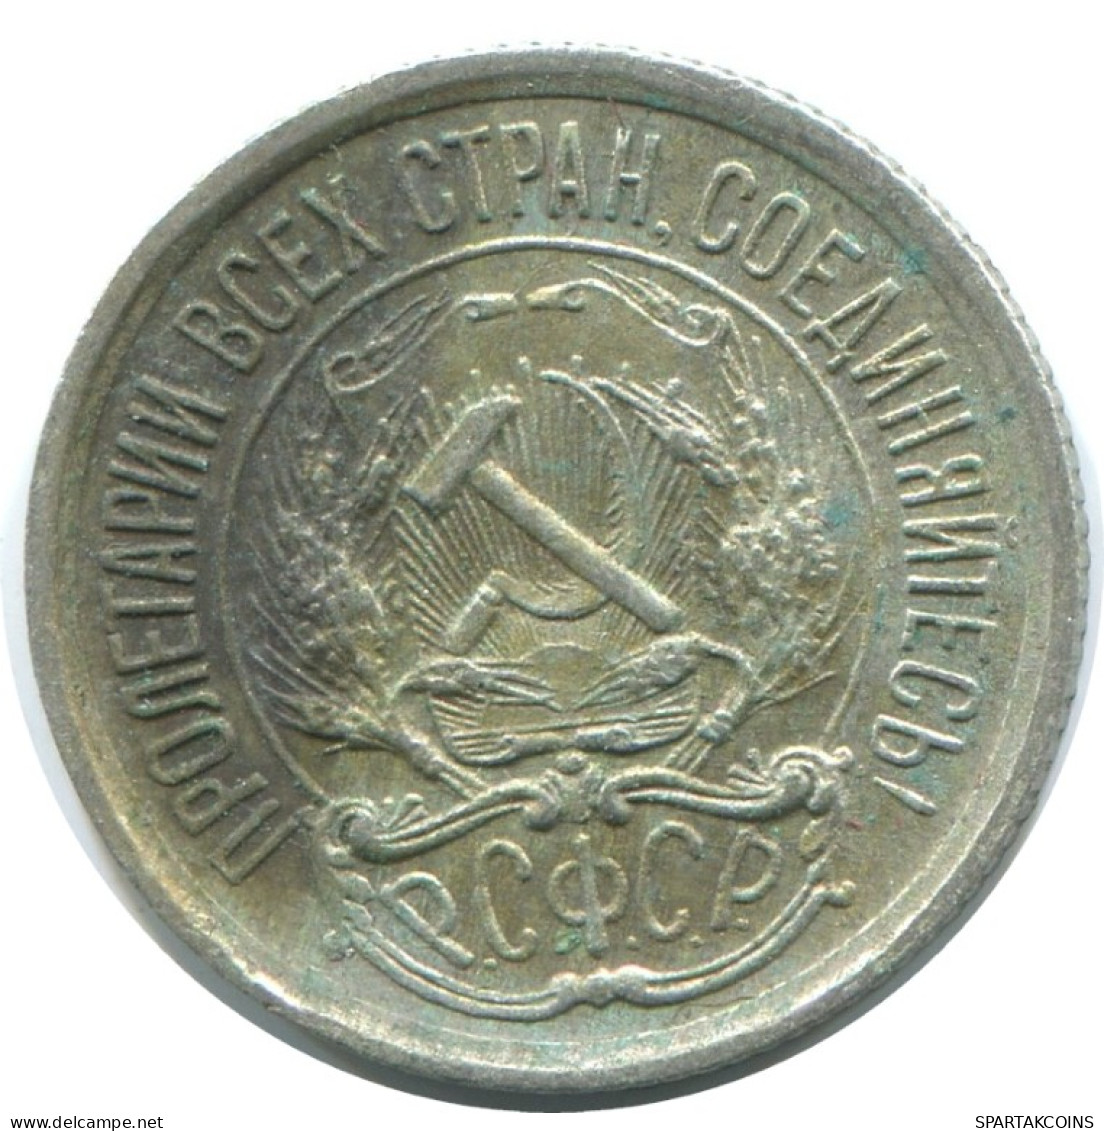 10 KOPEKS 1923 RUSSIA RSFSR SILVER Coin HIGH GRADE #AE963.4.U.A - Russie